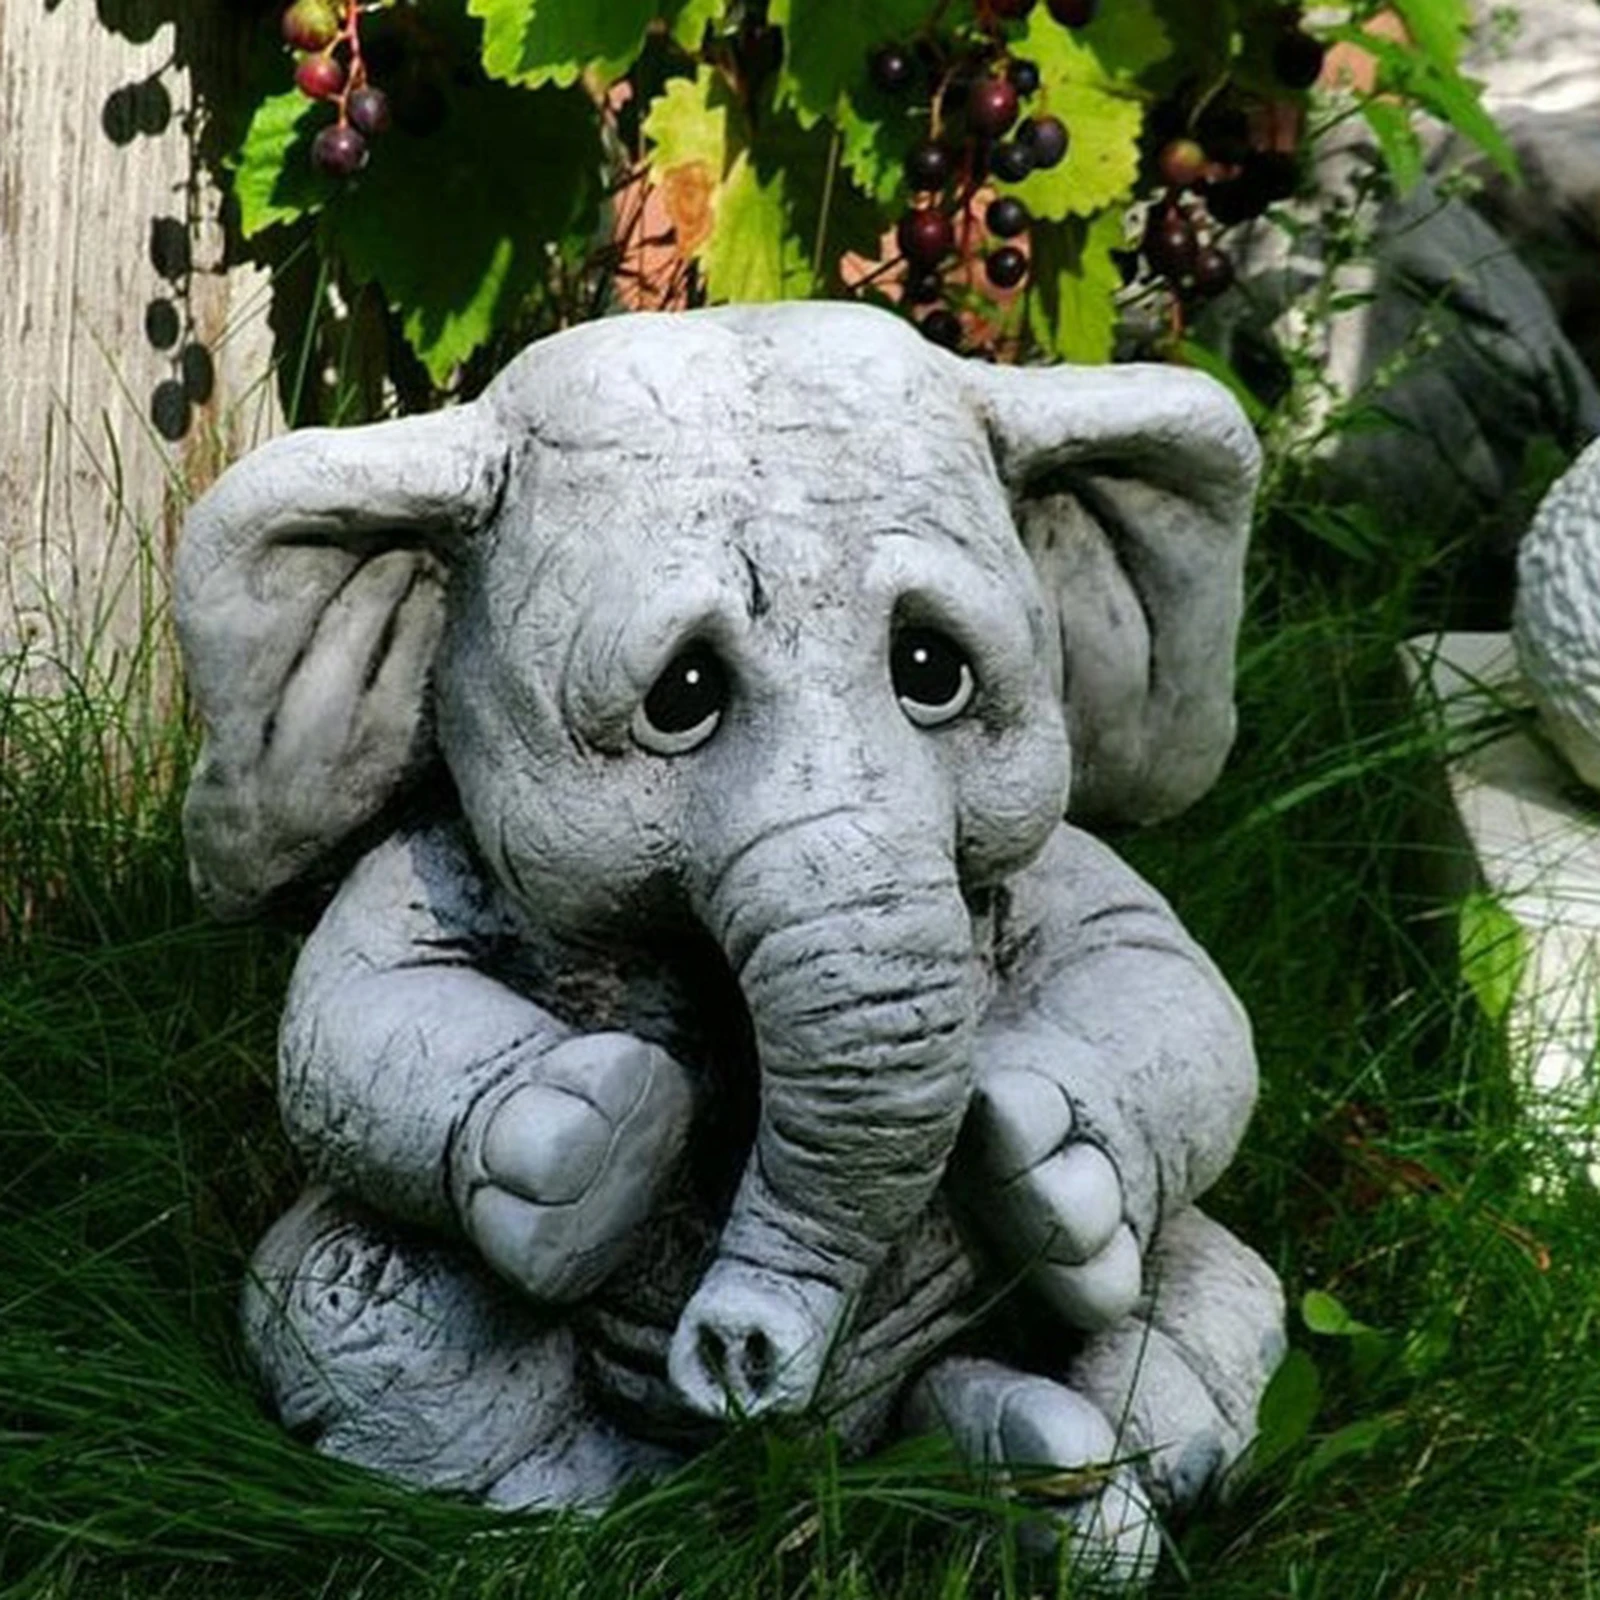 Sitting Elephants Figurine Decor Gardening Statues Accessories Indoor Outdoor Home Office Garden Lawn Decor Ornament